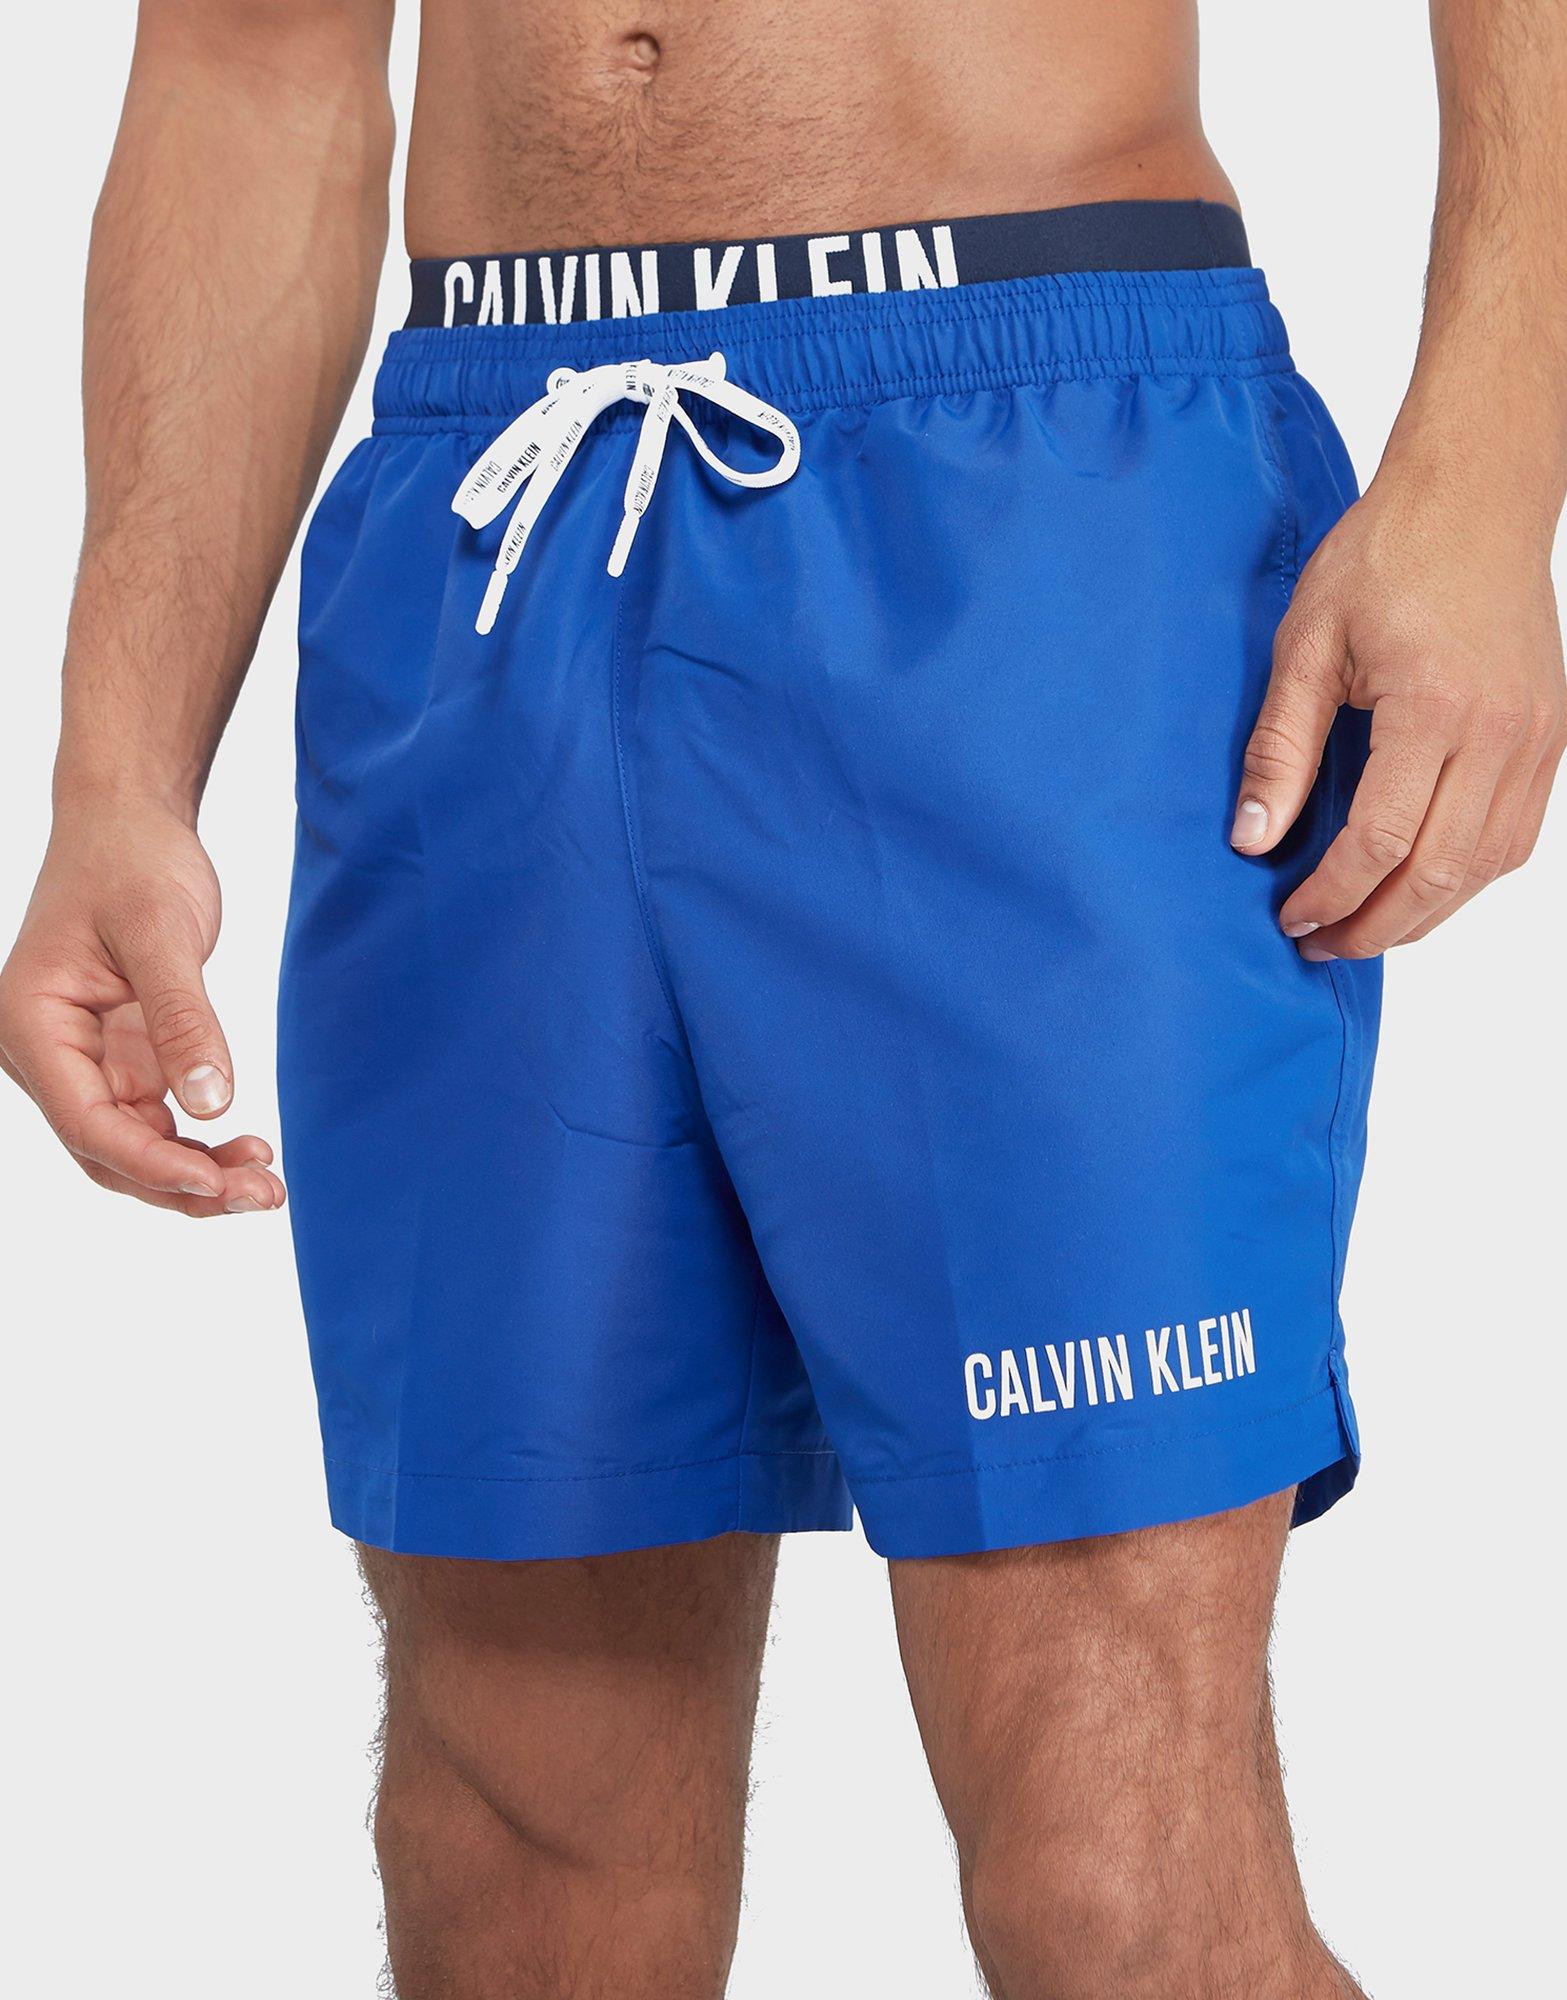 calvin klein waistband shorts